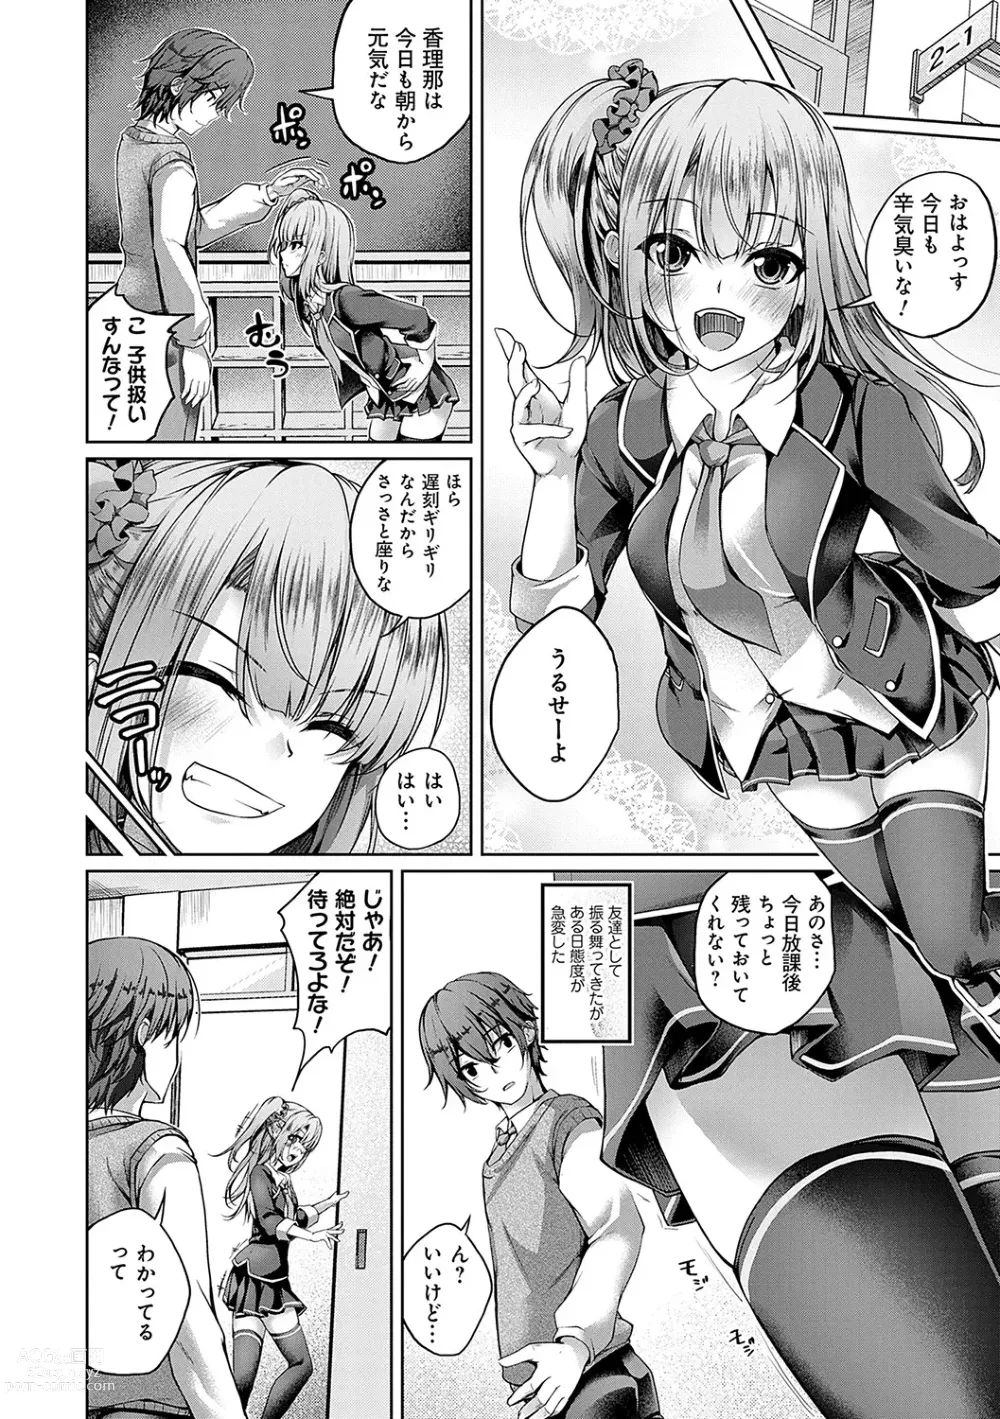 Page 7 of manga Koibana Fubuki